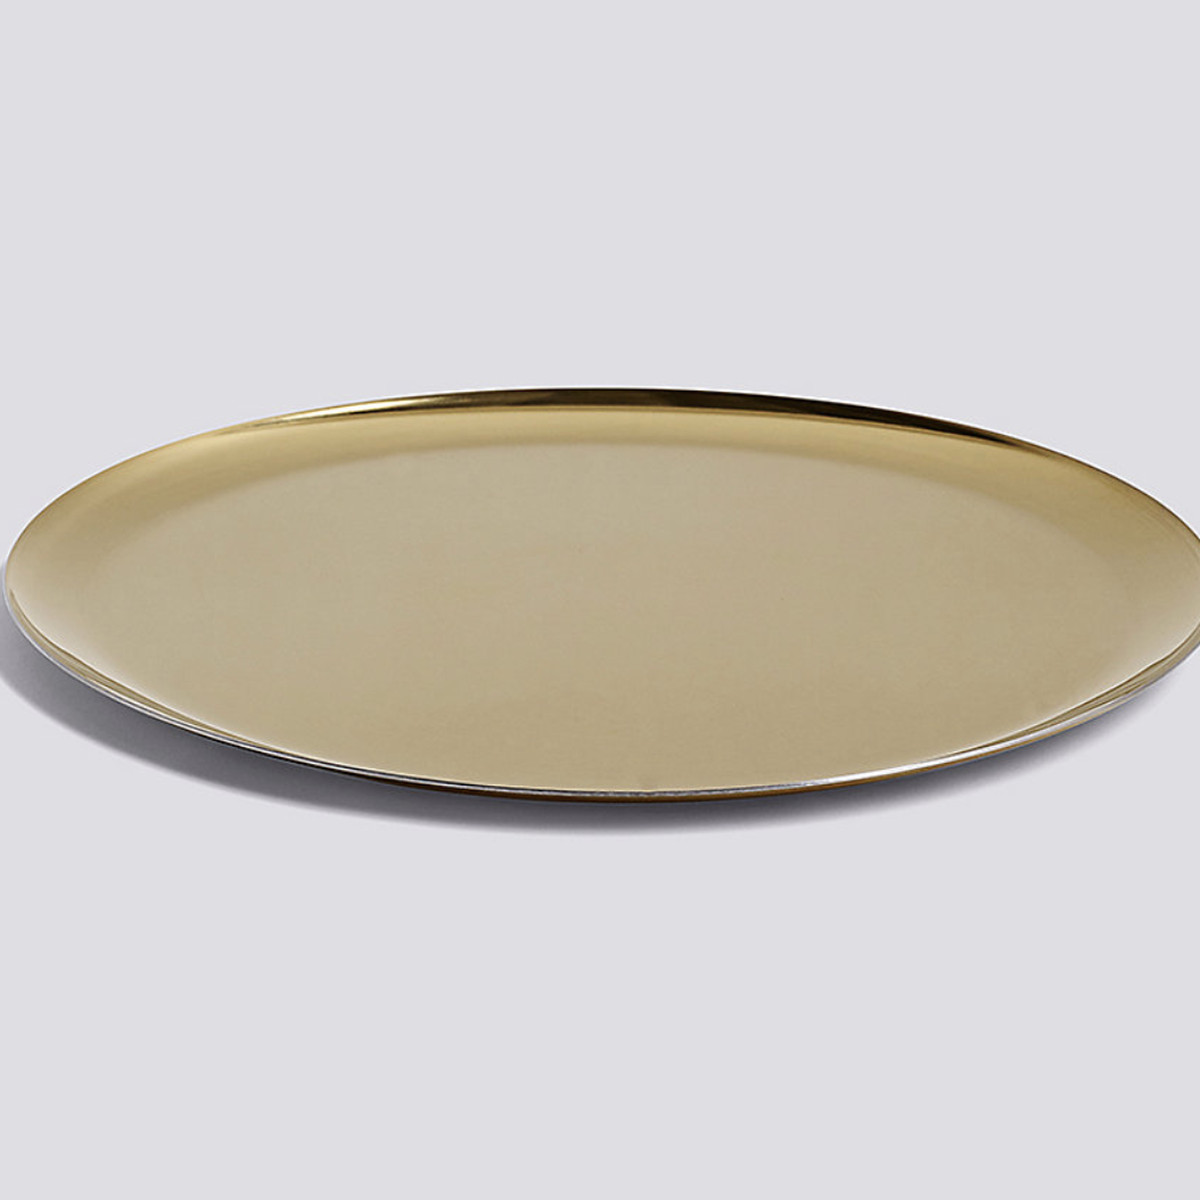 A gold, metallic tray that is circular. 